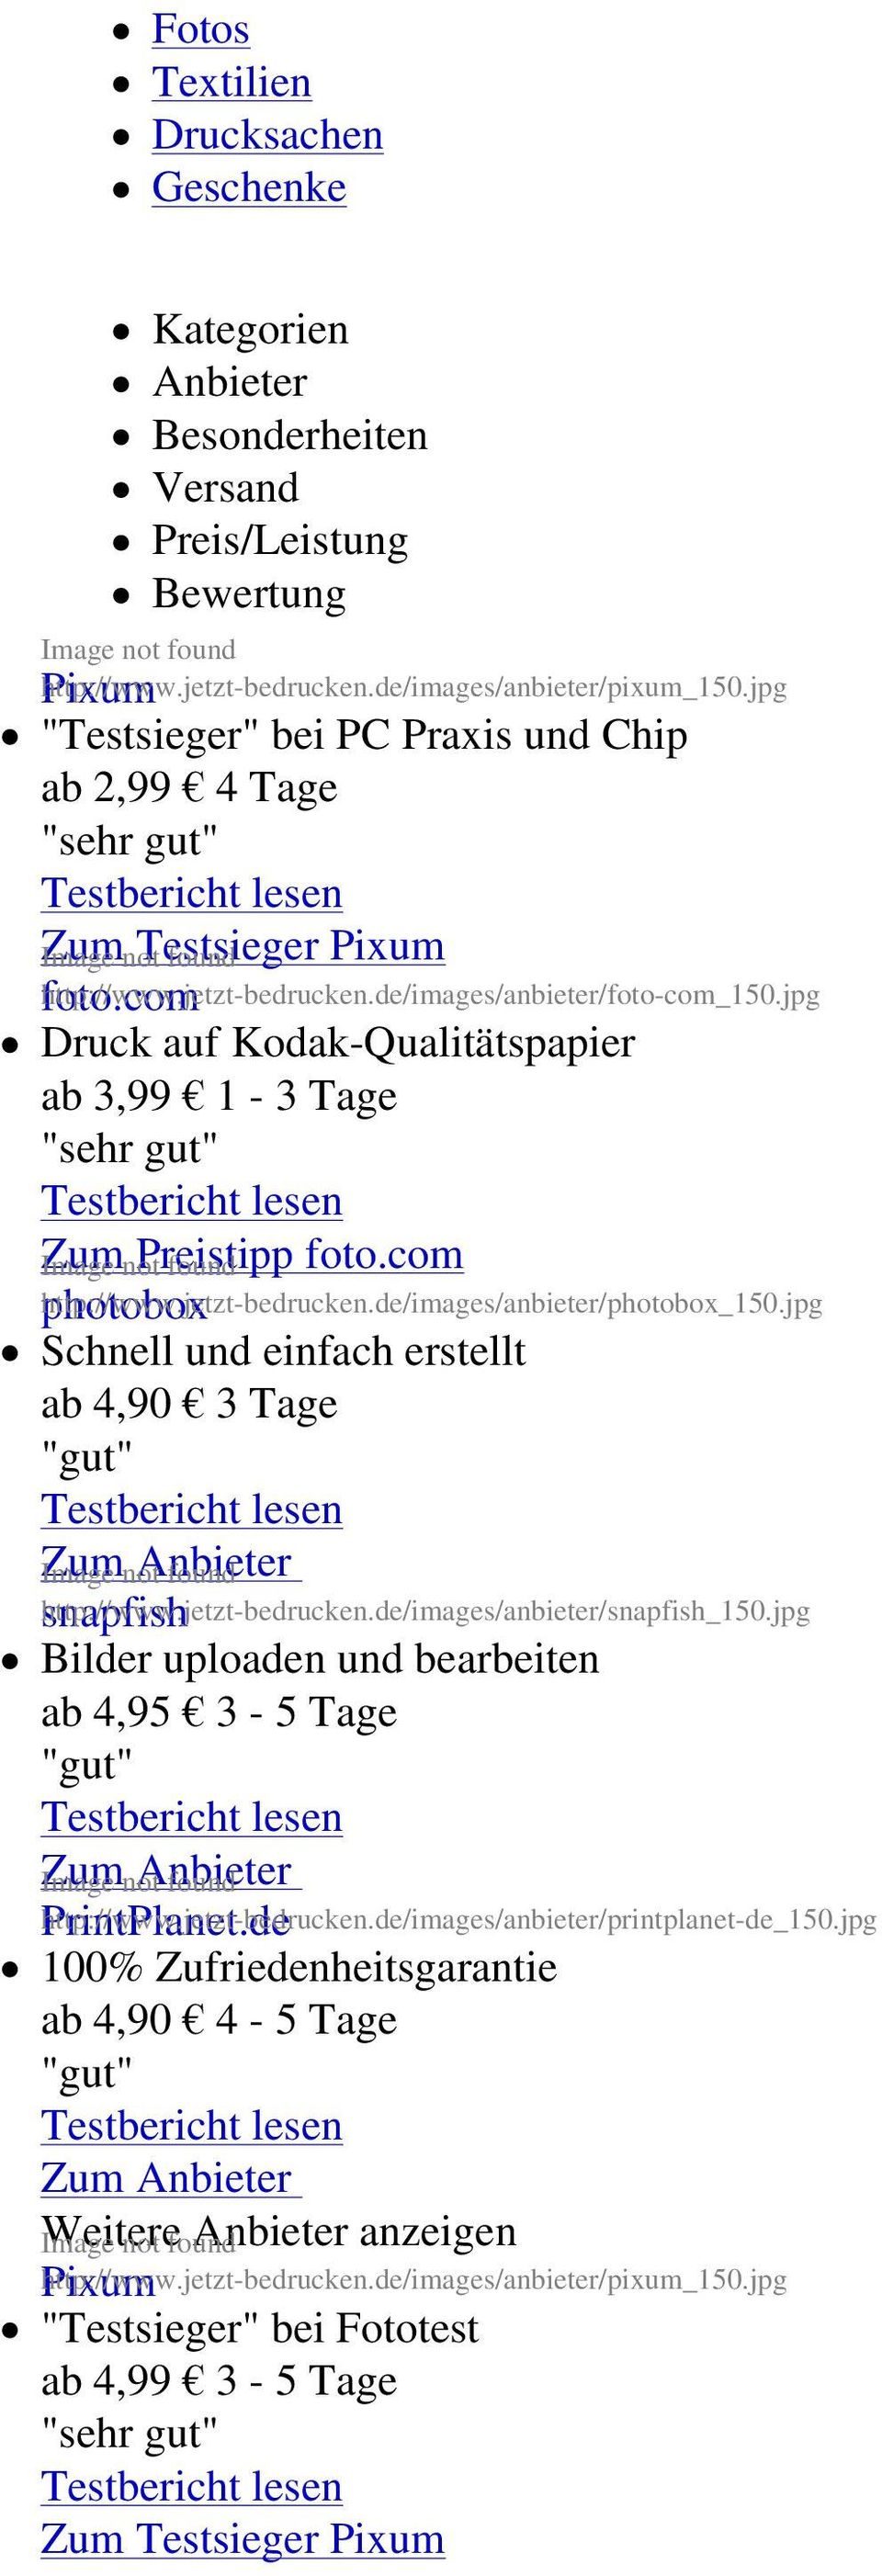 com Druck auf Kodak-Qualitätspapier ab 3,99 1-3 Tage Zum Preistipp foto.com http://www.jetzt-bedrucken.de/images/anbieter/photobox_150.